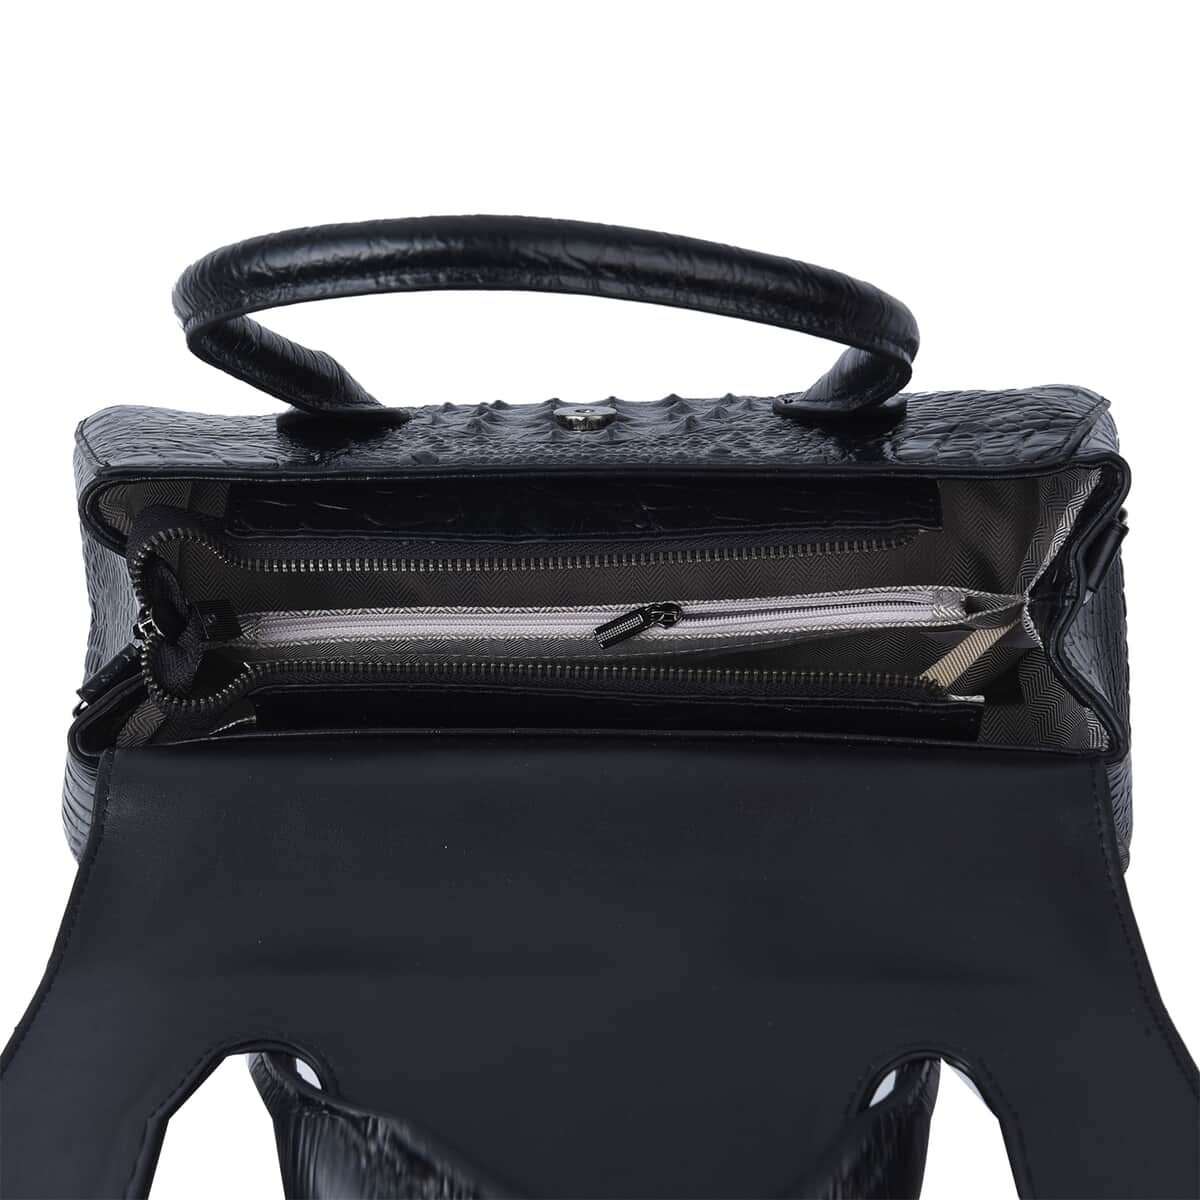 Black Crocodile Skin Pattern Inspired Genuine Leather Convertible Bag (13"x5"x7.5") image number 4